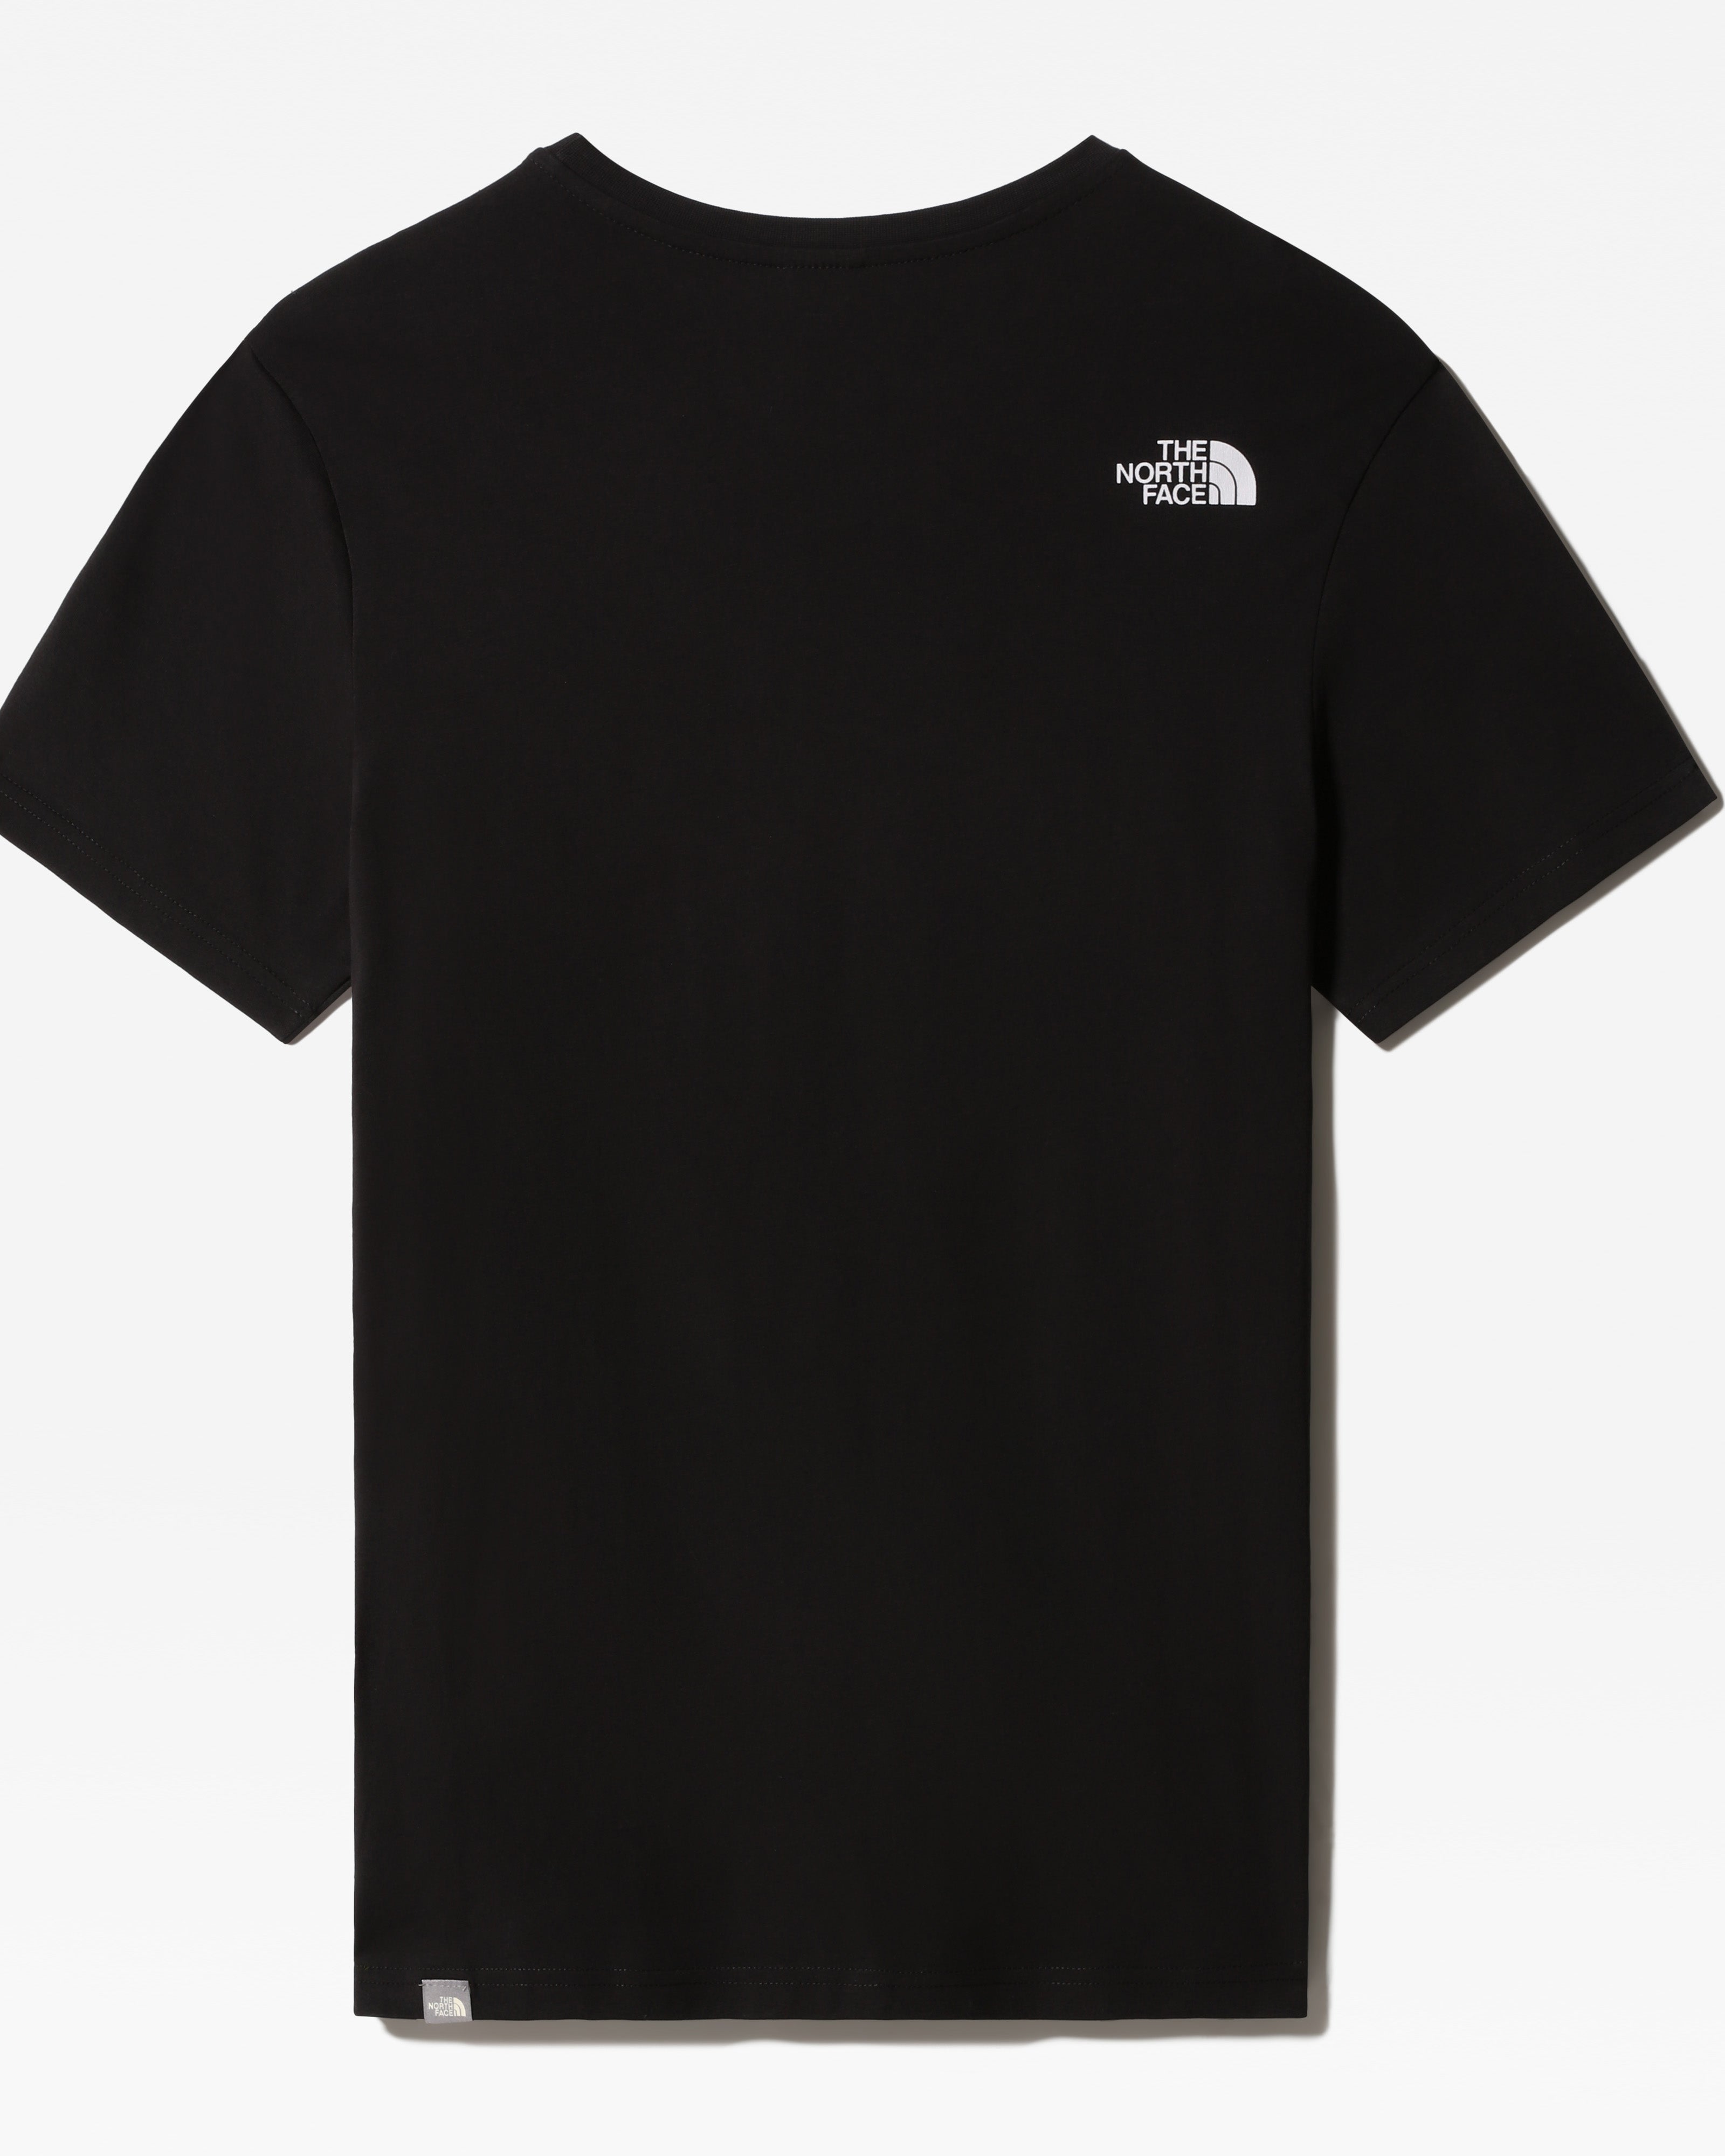 The North Face Simple Dome T-shirt Preta